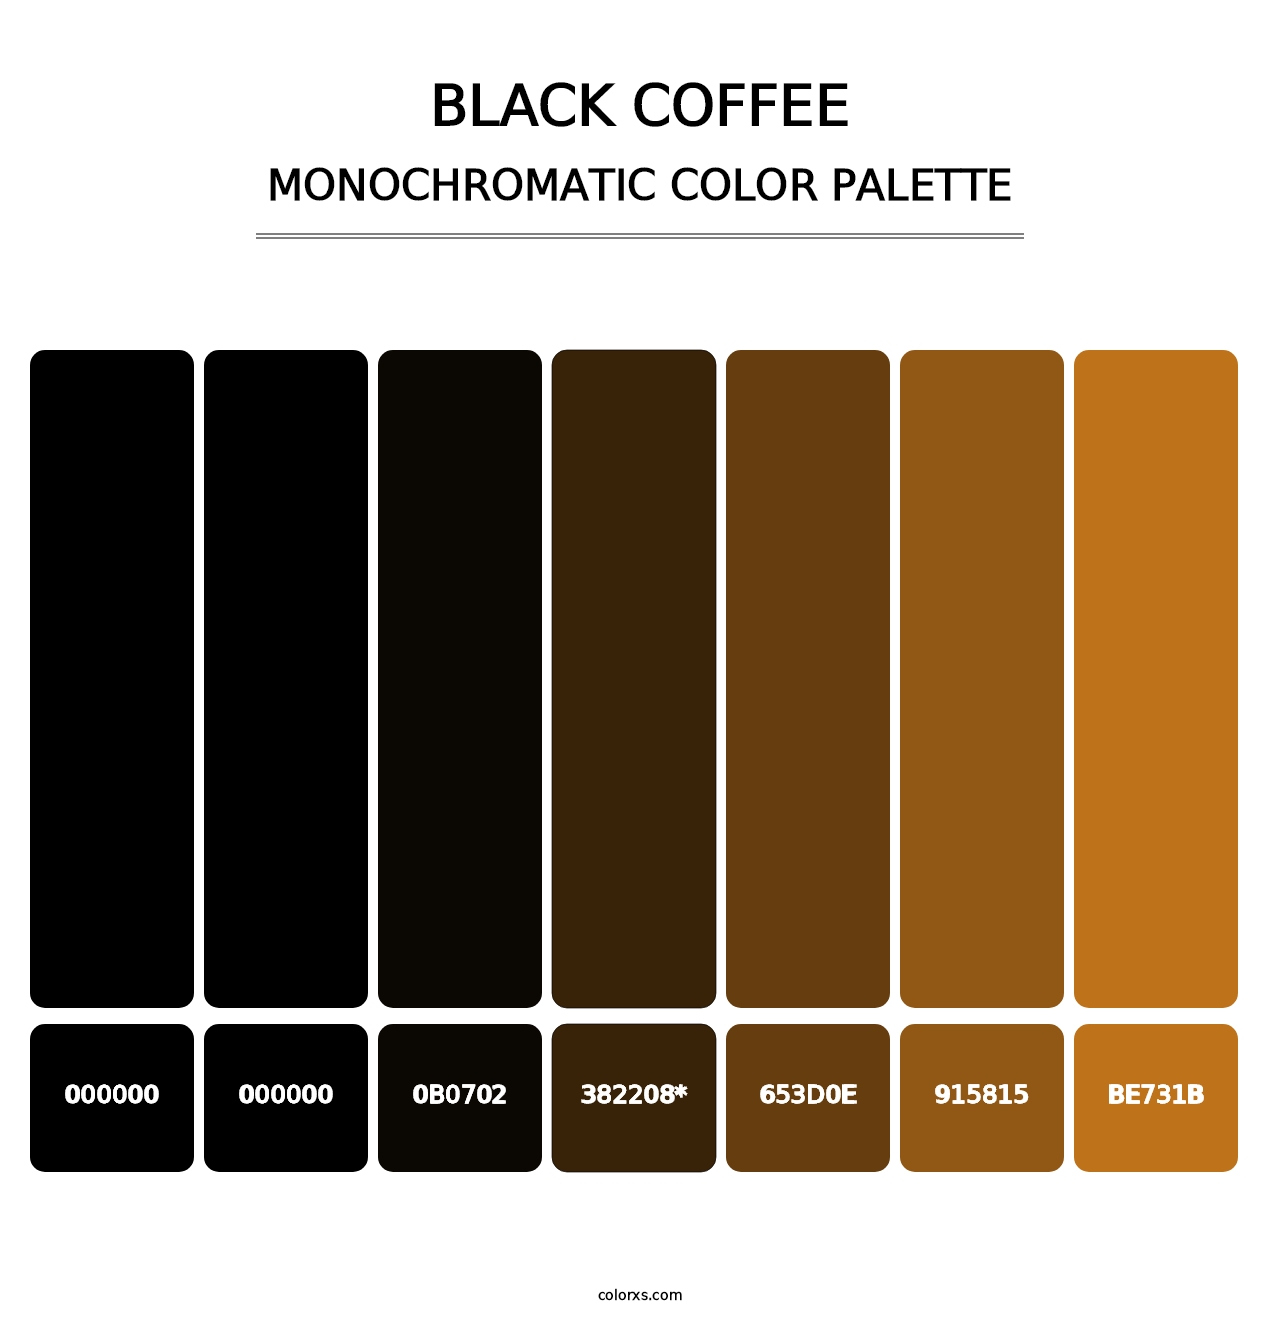 Black Coffee - Monochromatic Color Palette